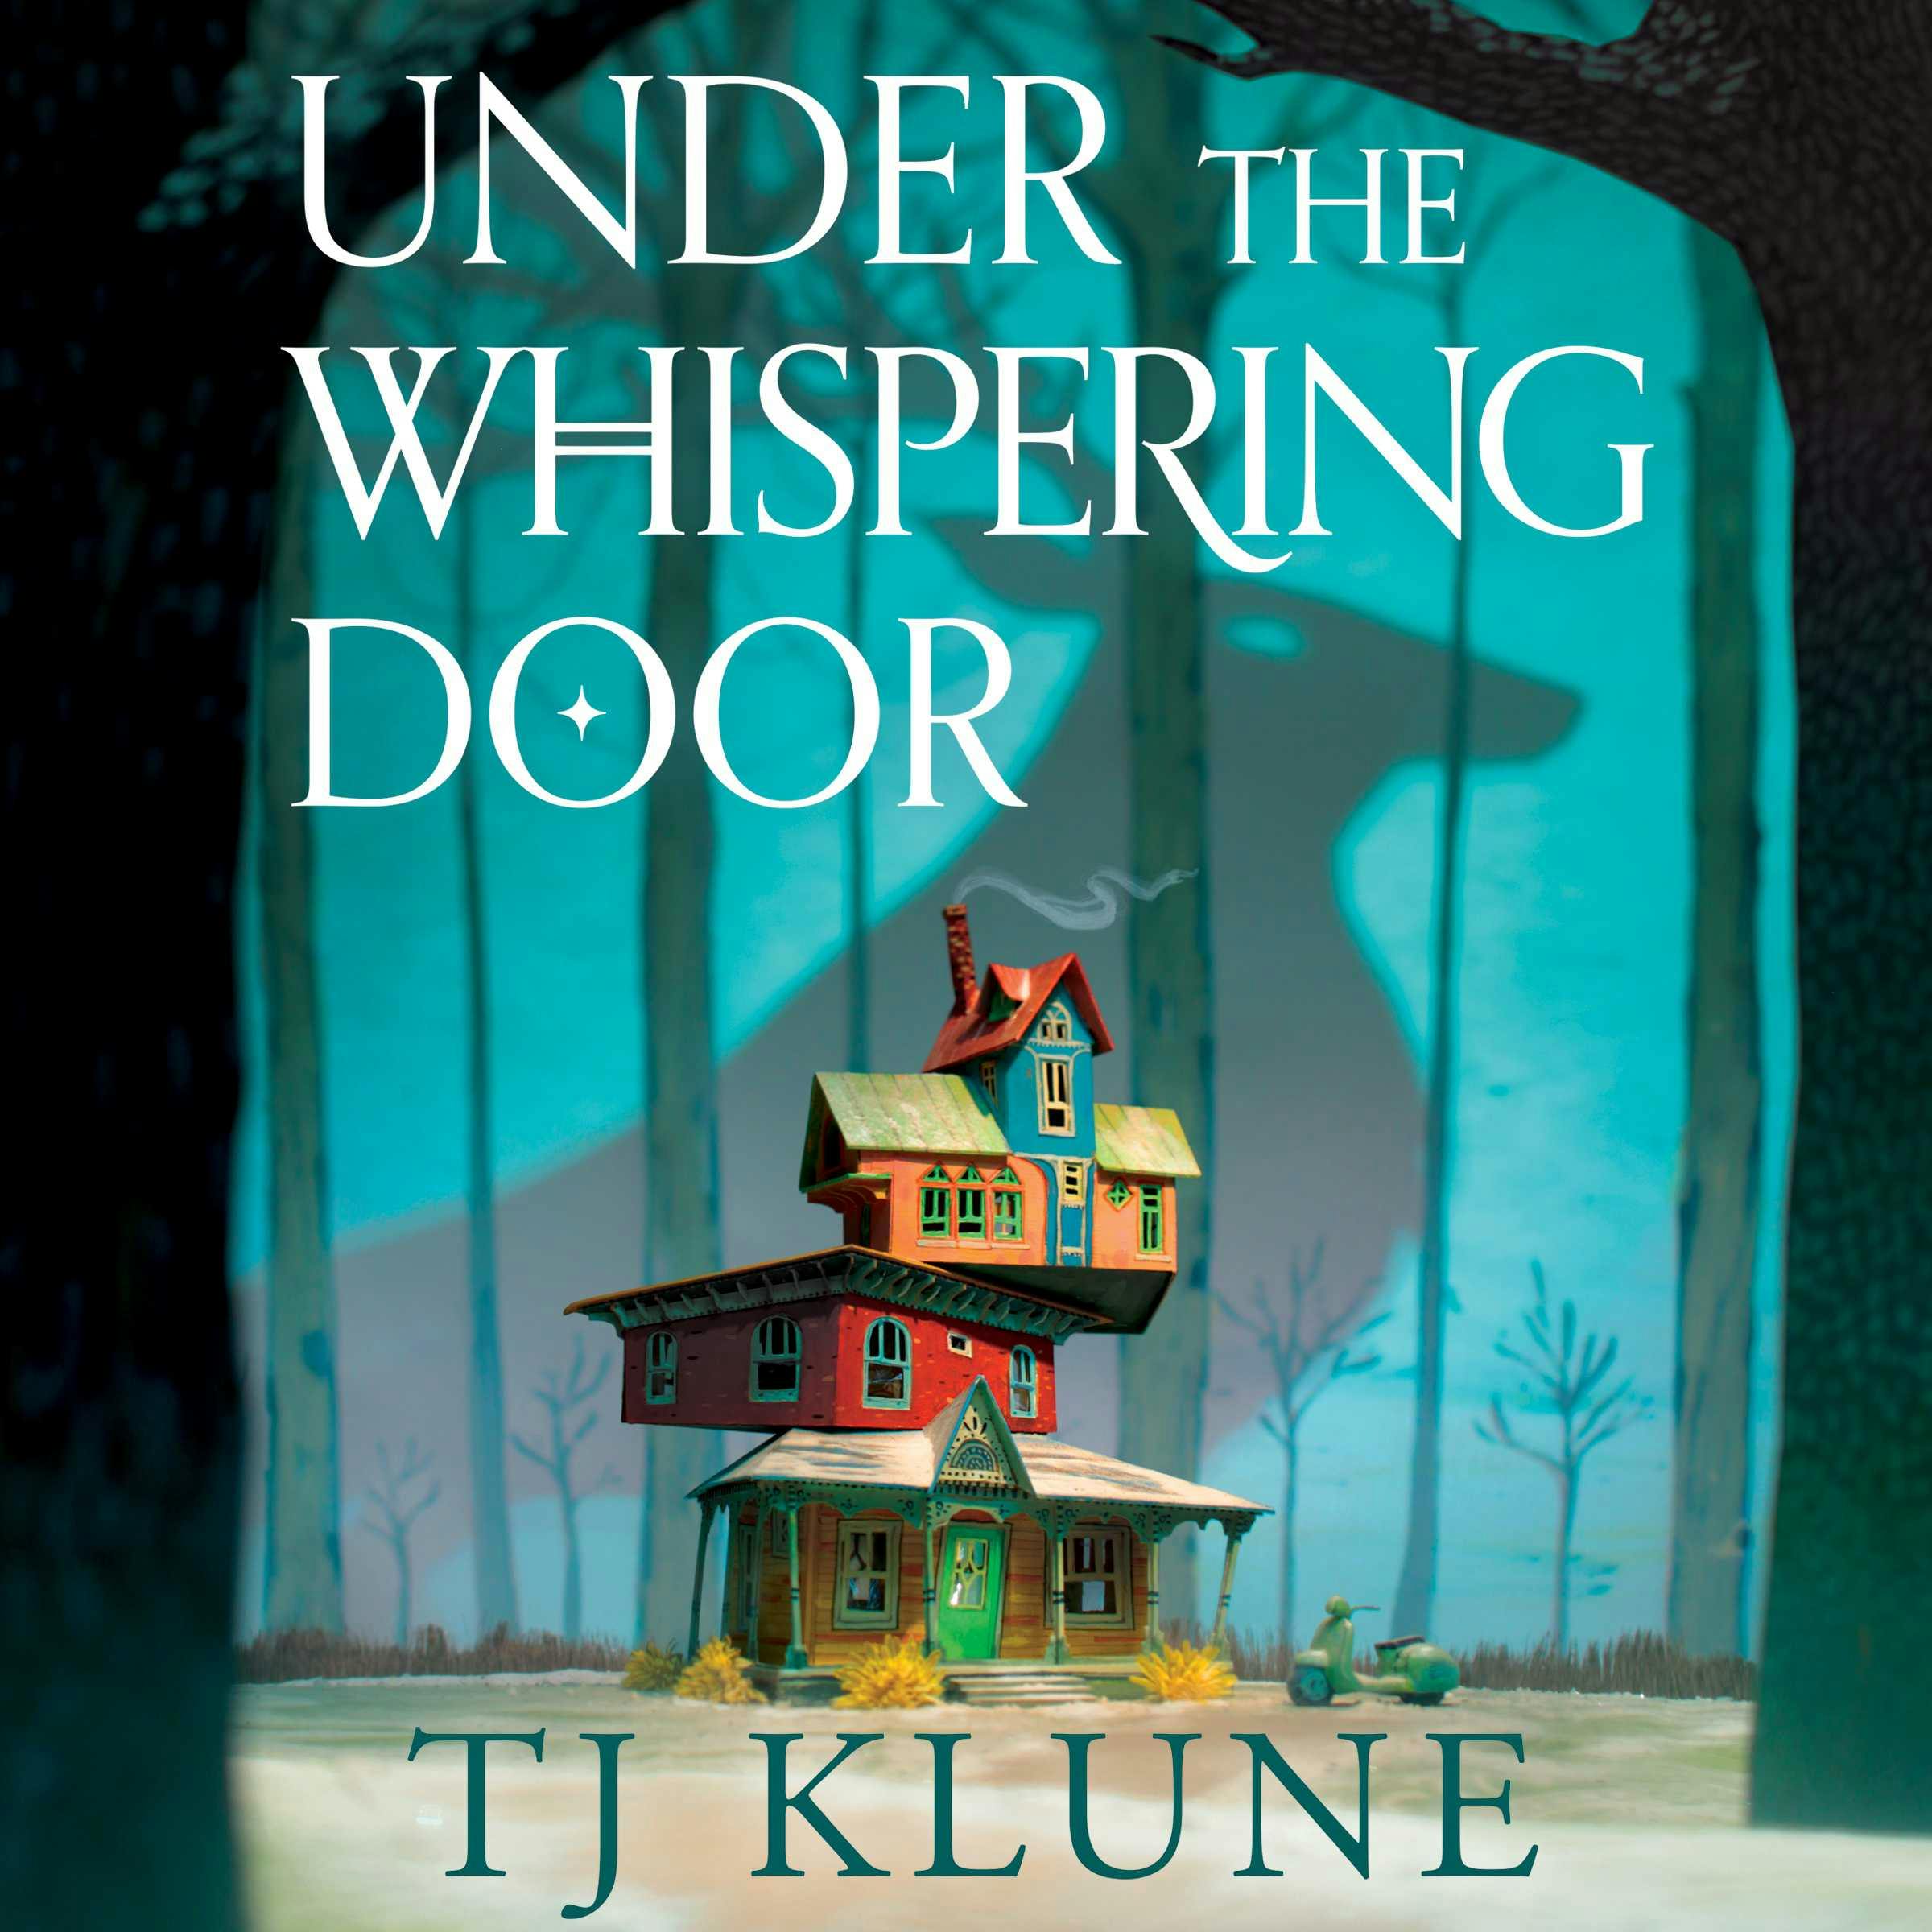 Under the Whispering Door - TJ Klune